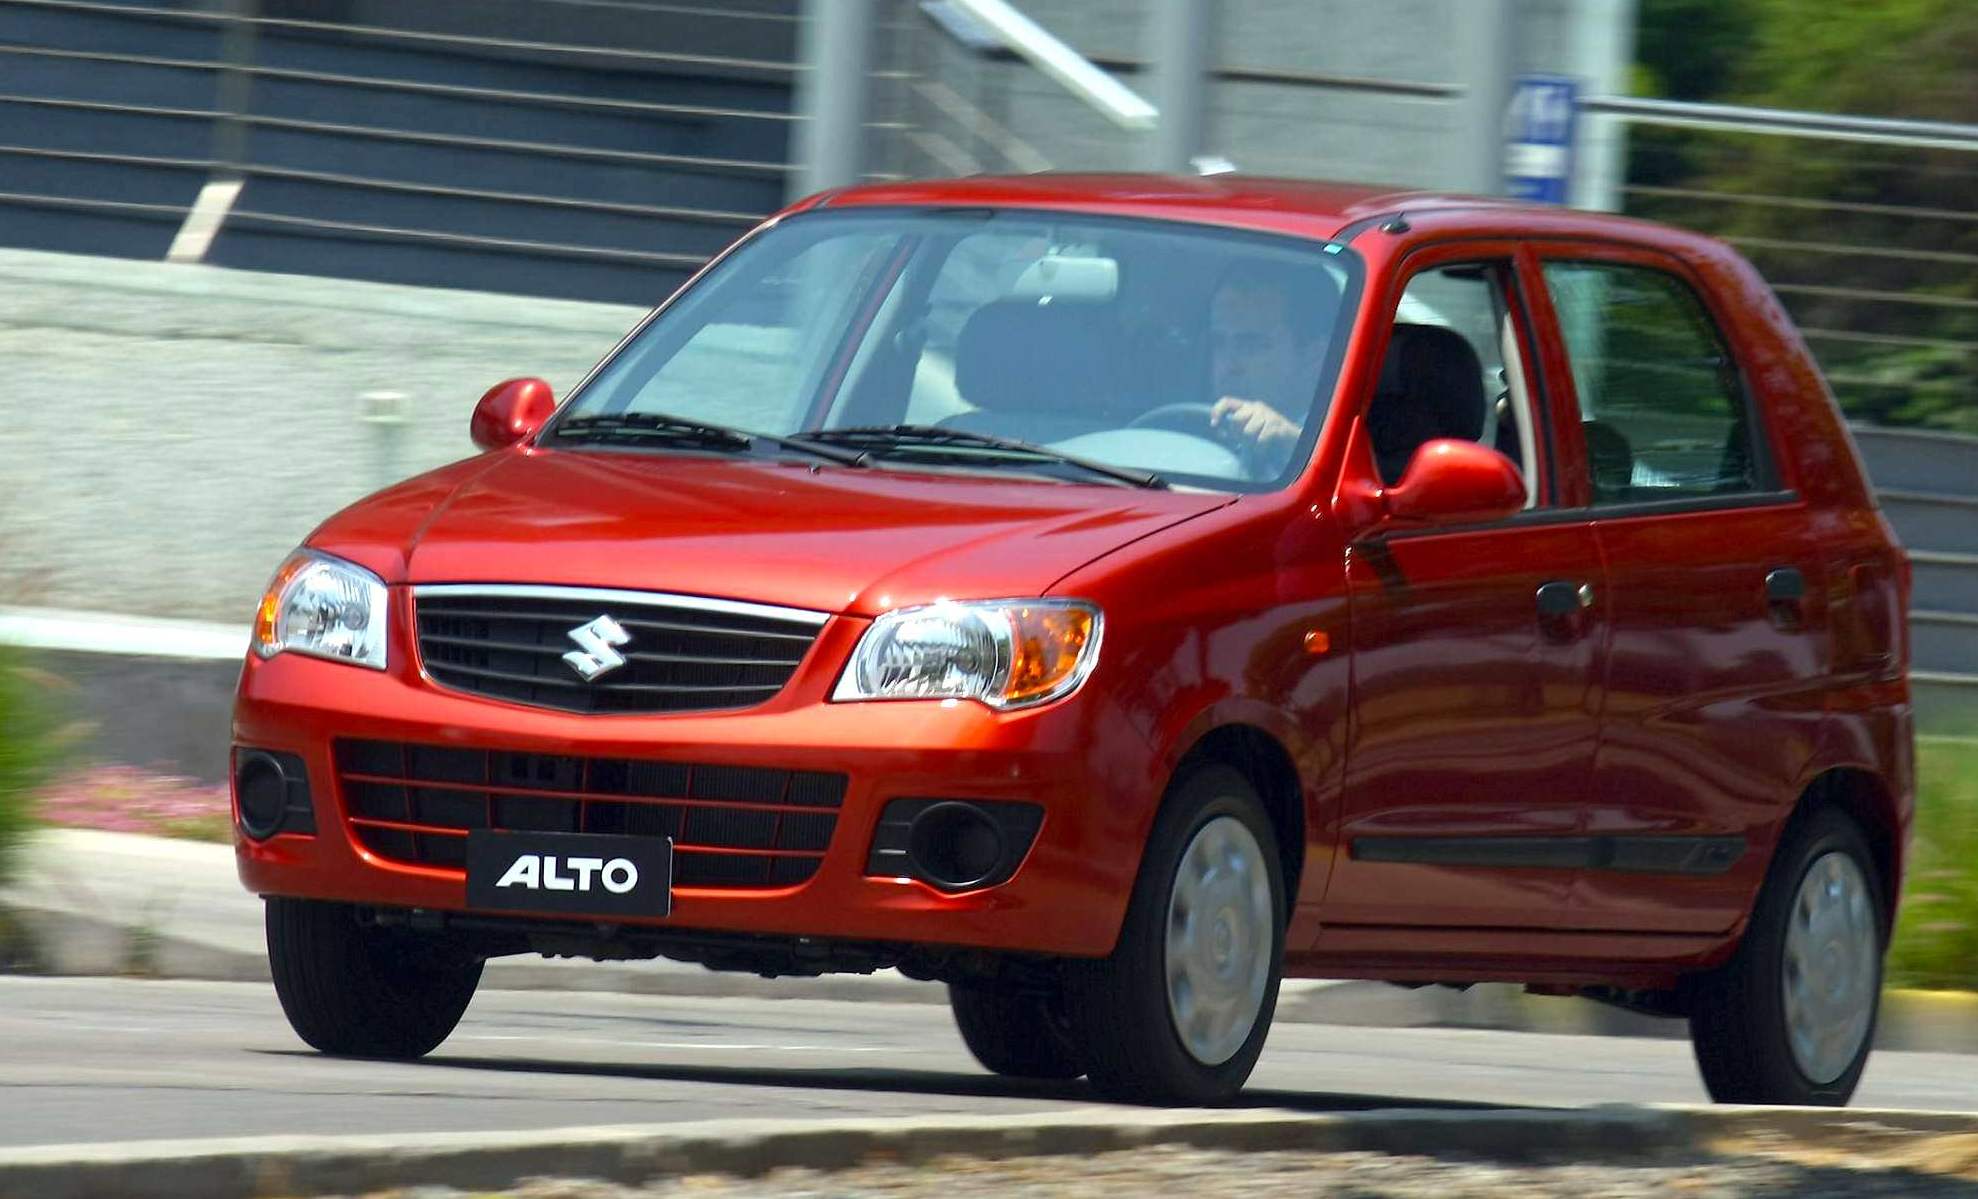 Best Selling Cars â€“ Matt's blog Â» India March 2011: Maruti Alto ...